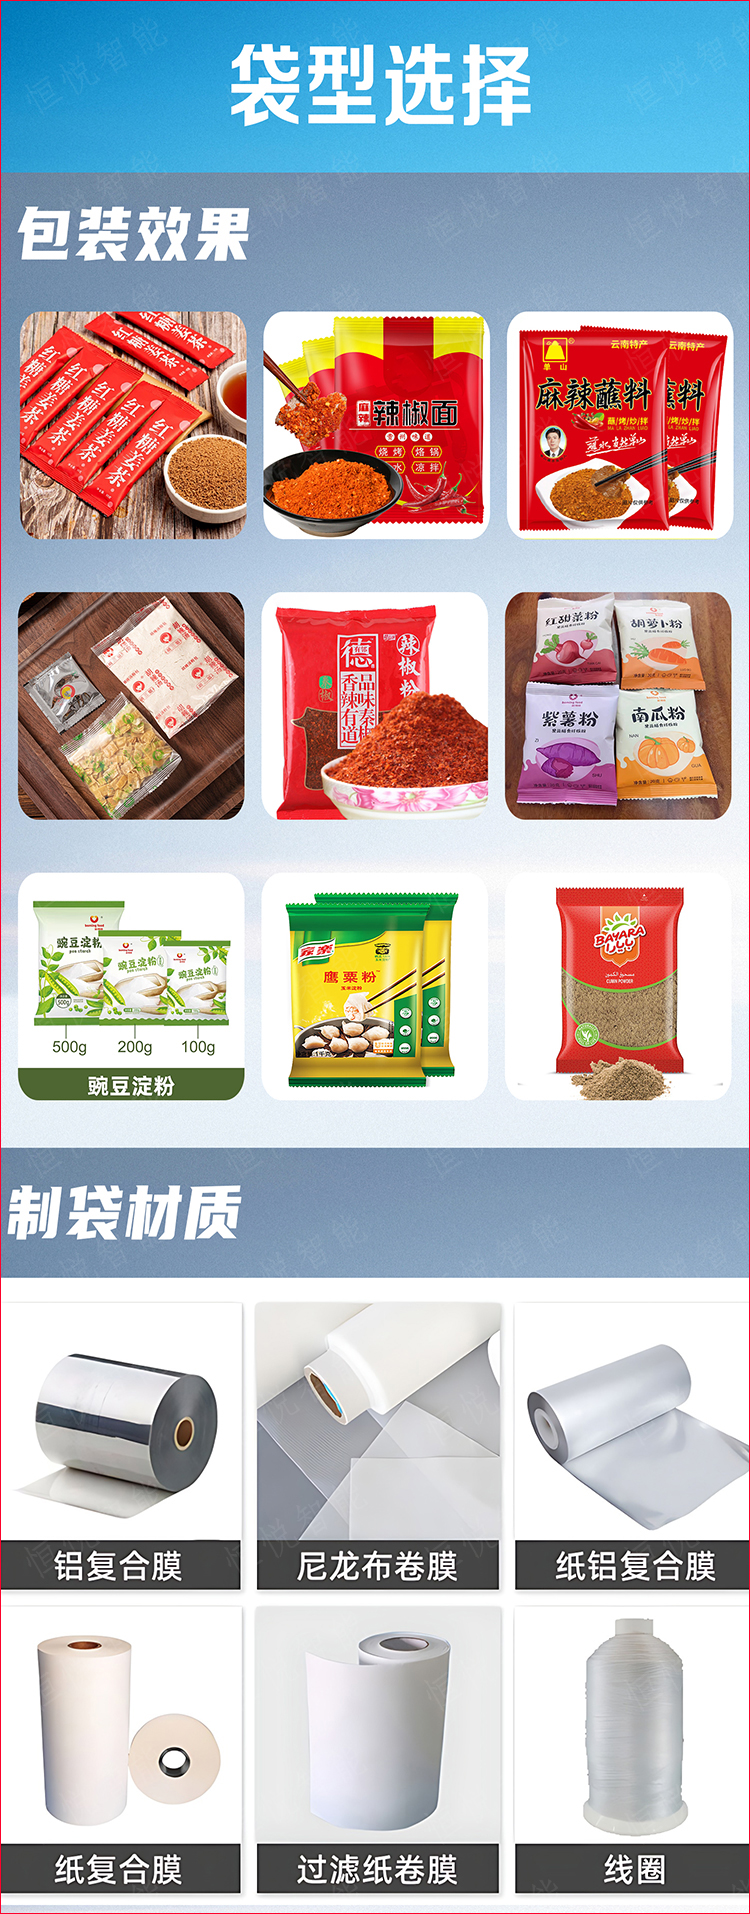 Spice Chili powder packaging machine pepper noodles Five-spice powder barbecue dip packaging machine 2~1000g seasoning bags